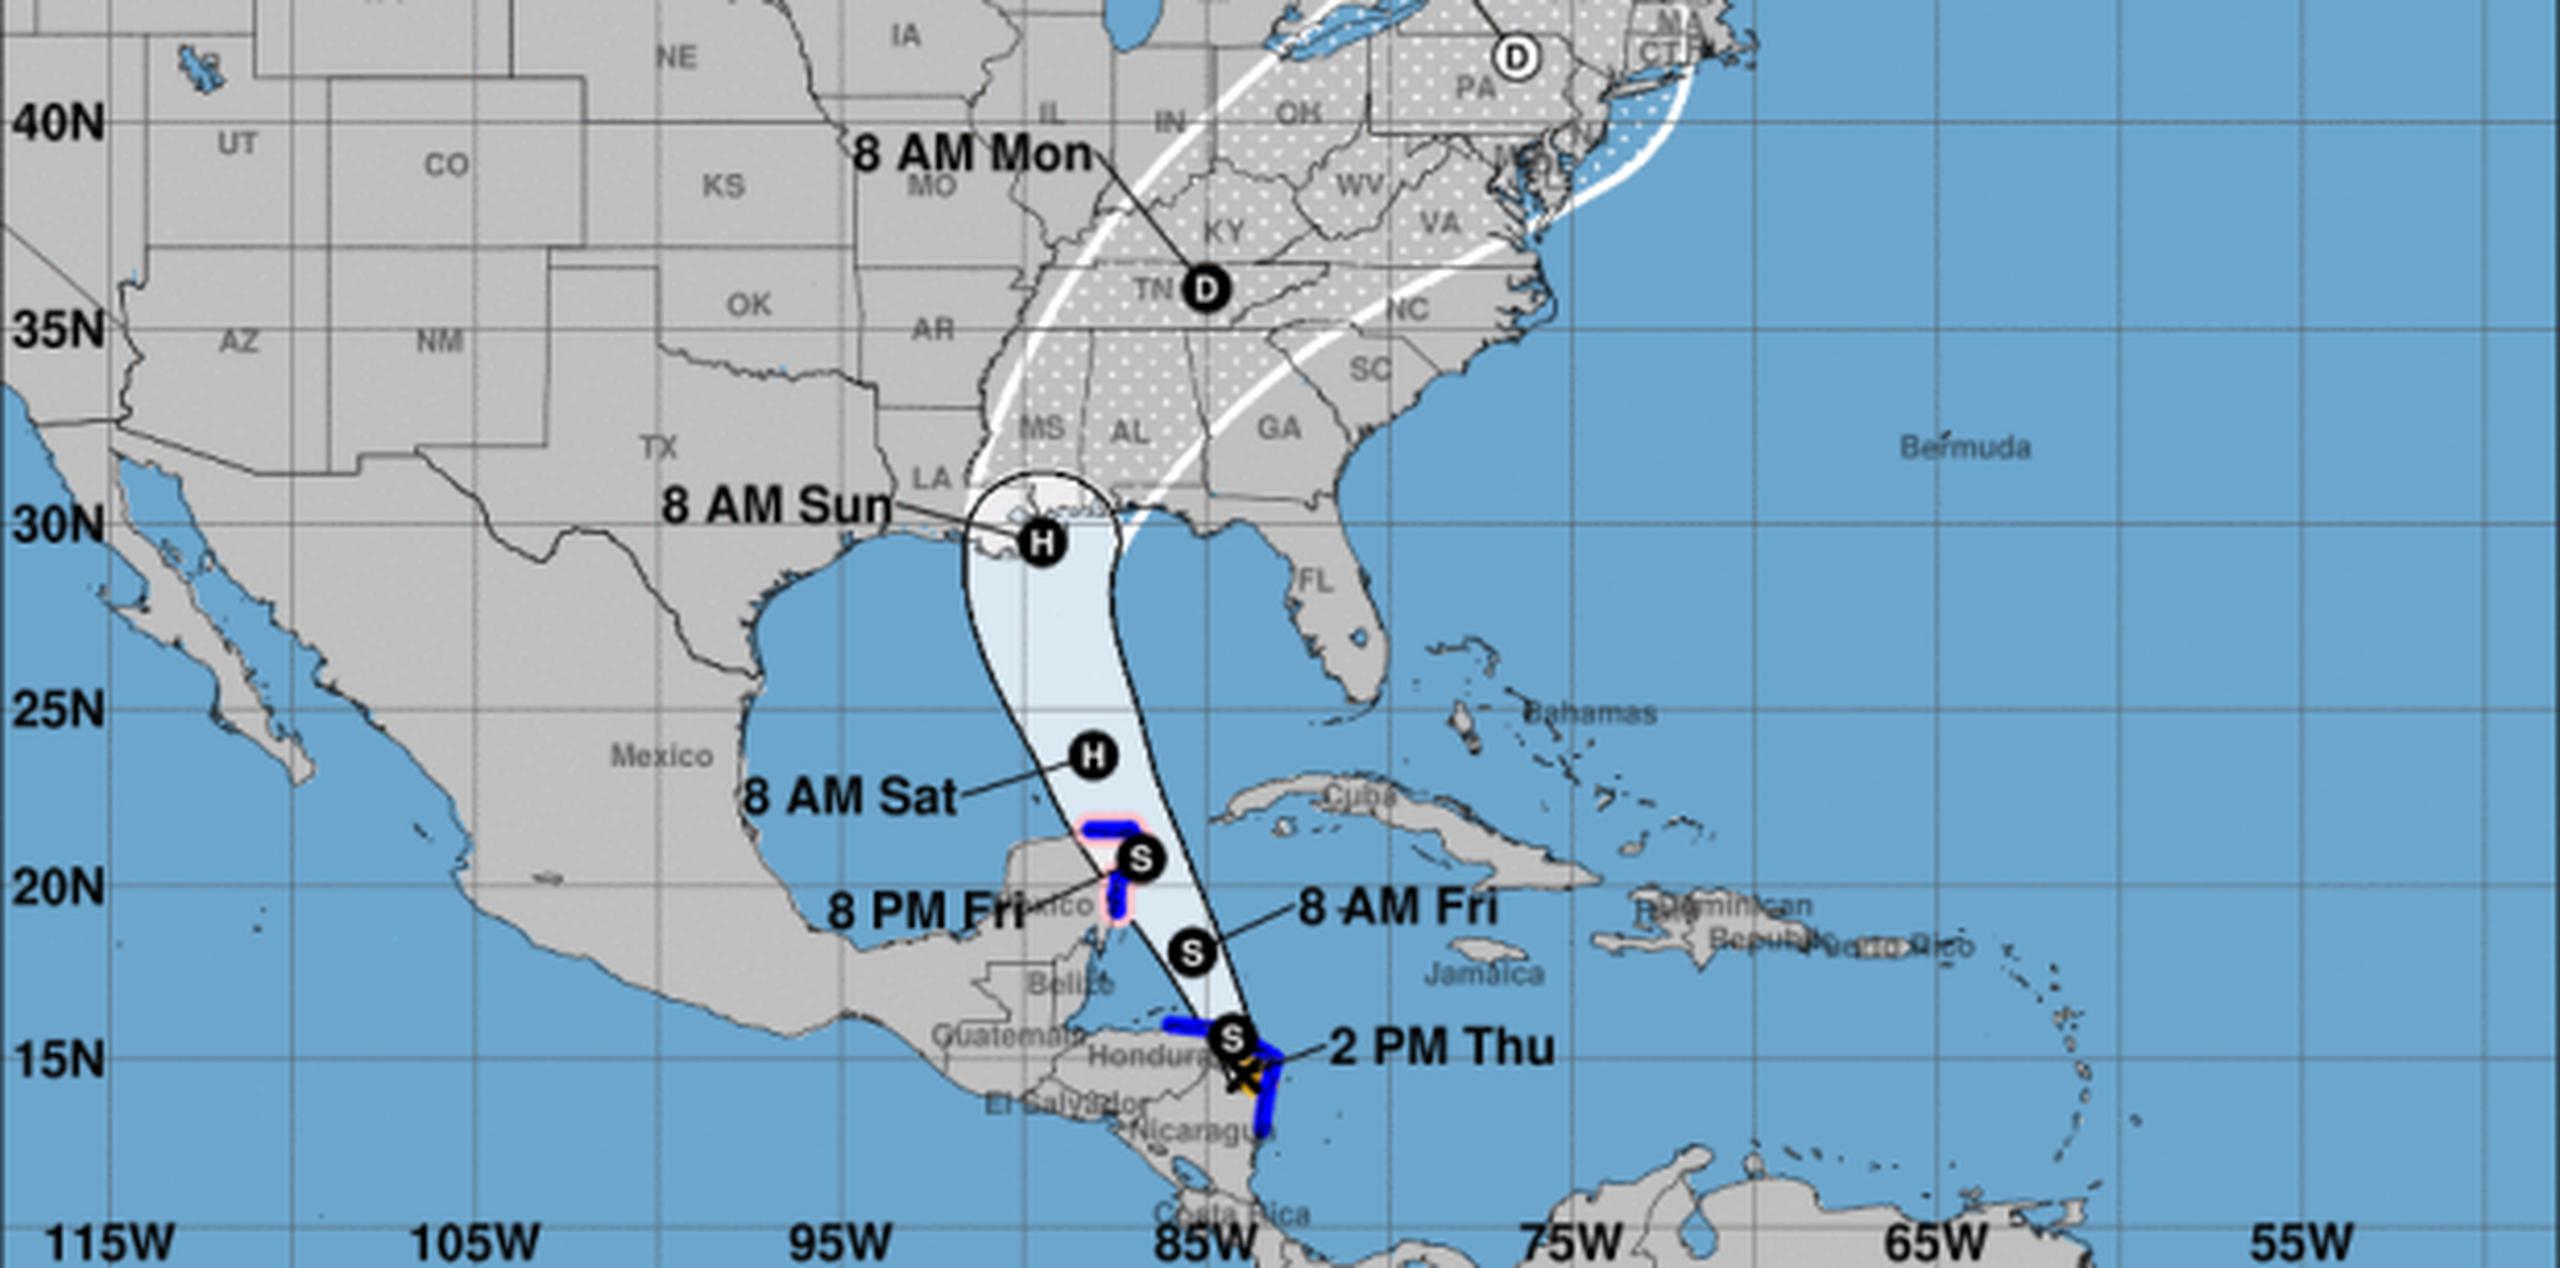 Trayectoria de la tormenta tropical Nate, según el boletín de las 2:00 p.m. del Centro Nacional de Huracanes. (NOAA)